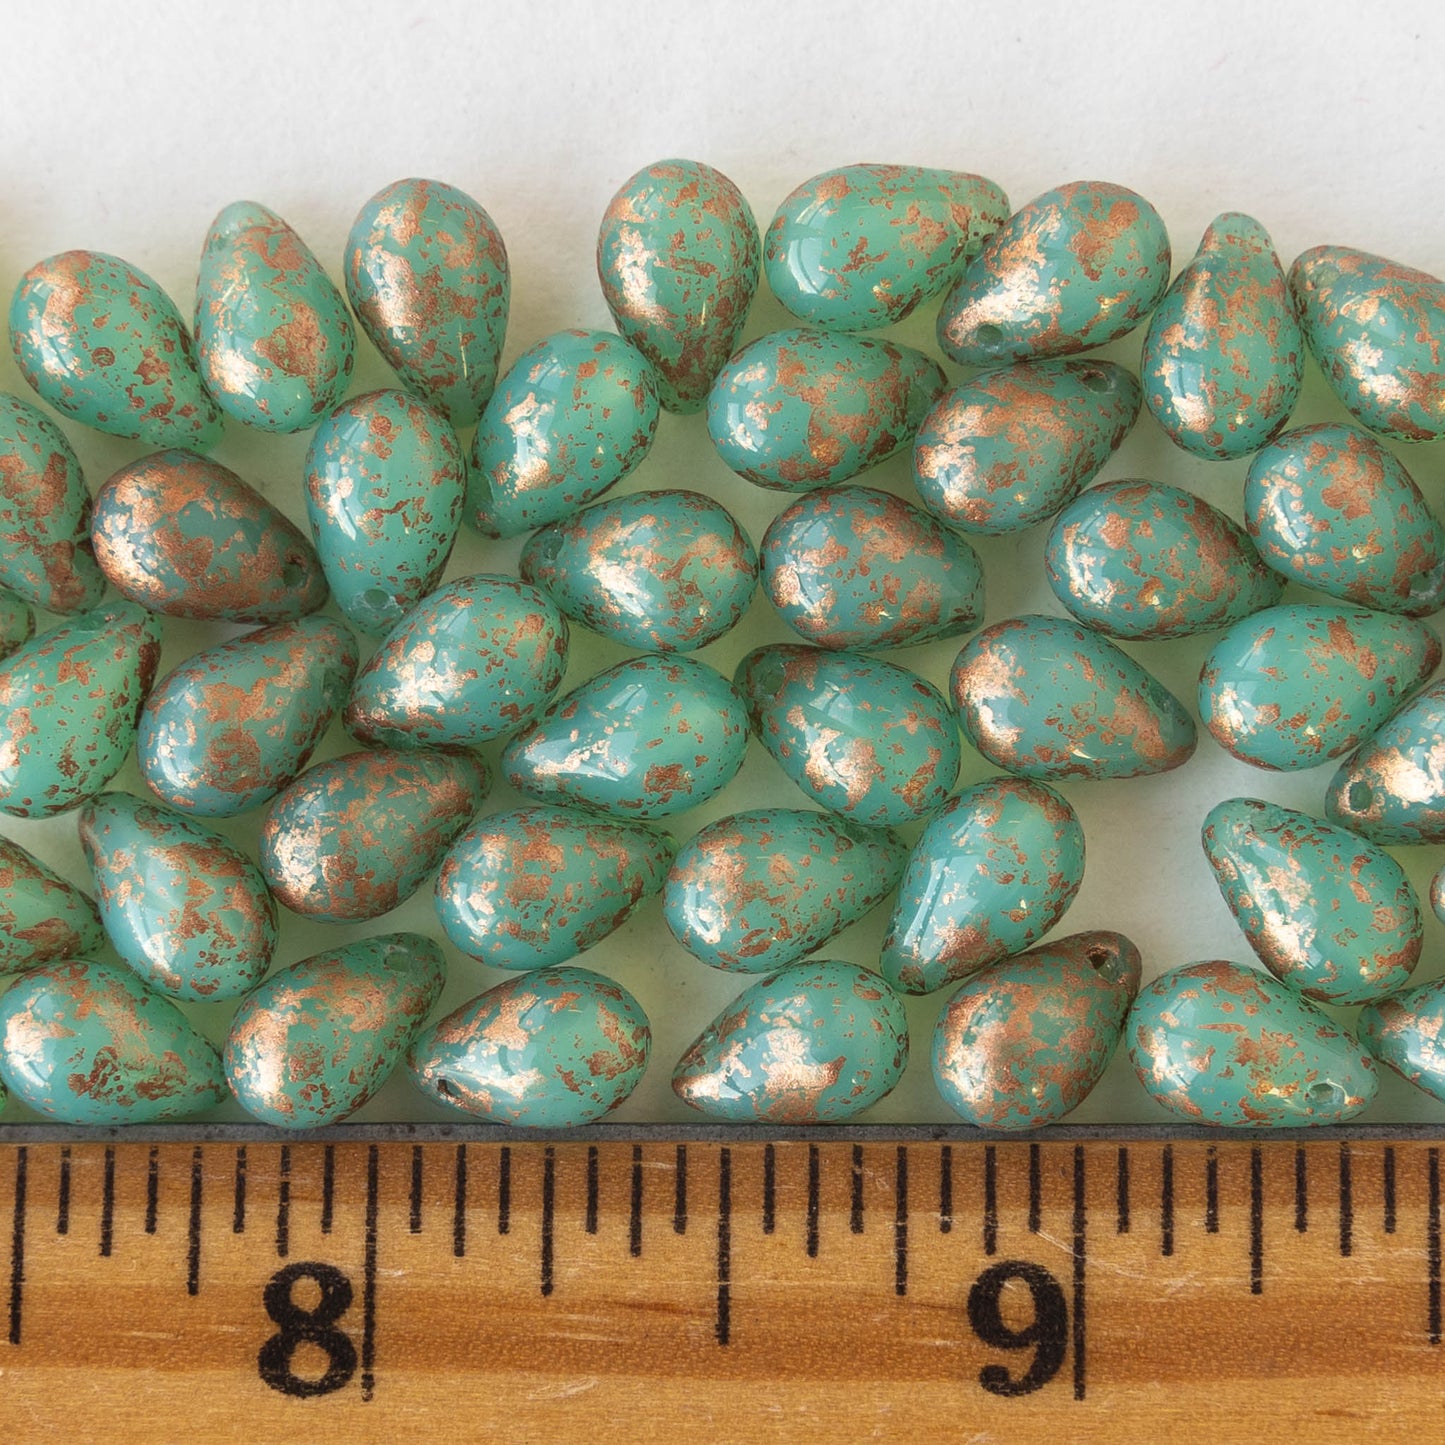 6x9mm Glass Teardrop Beads - Seafoam Green with Gold Dust - 50 Beads